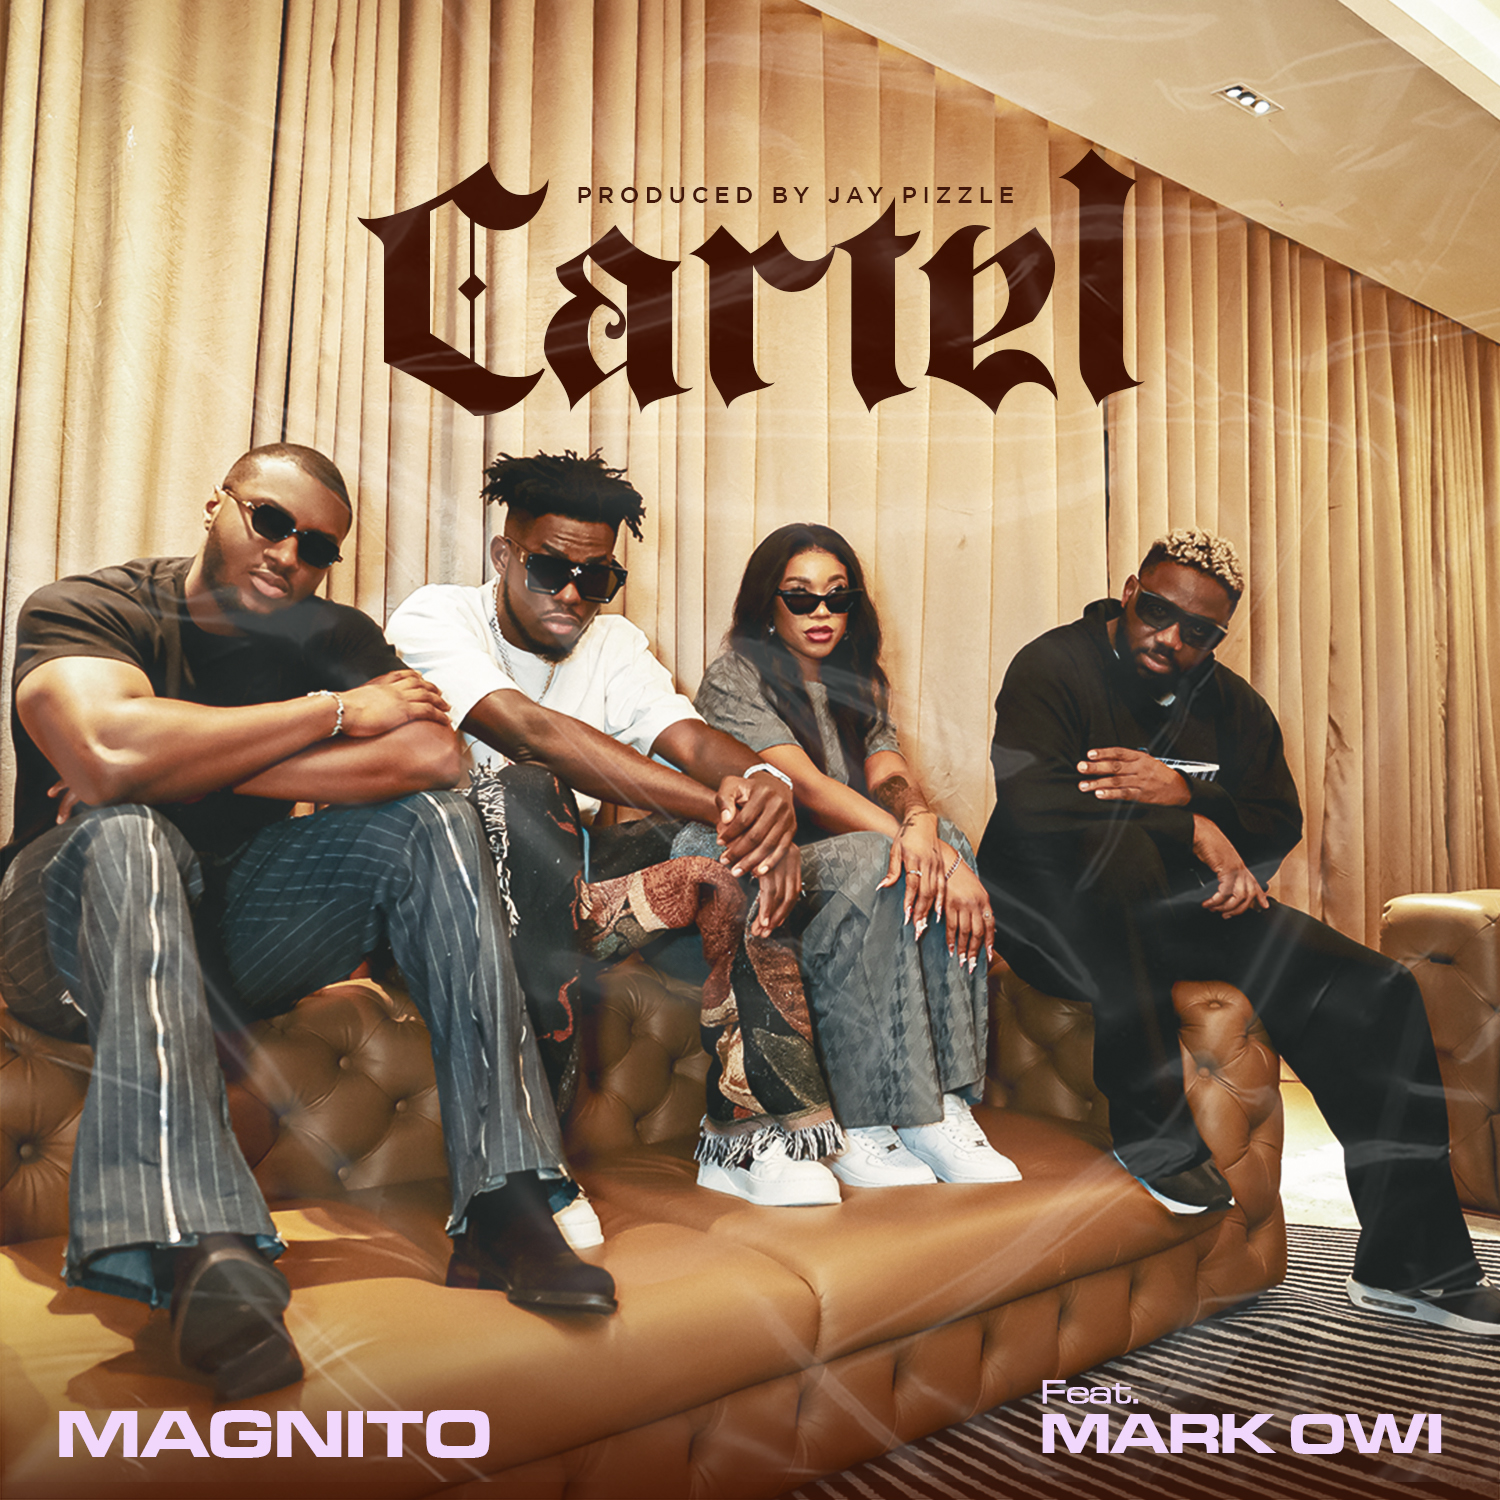 Magnito Cartel Ft. Mark Owi